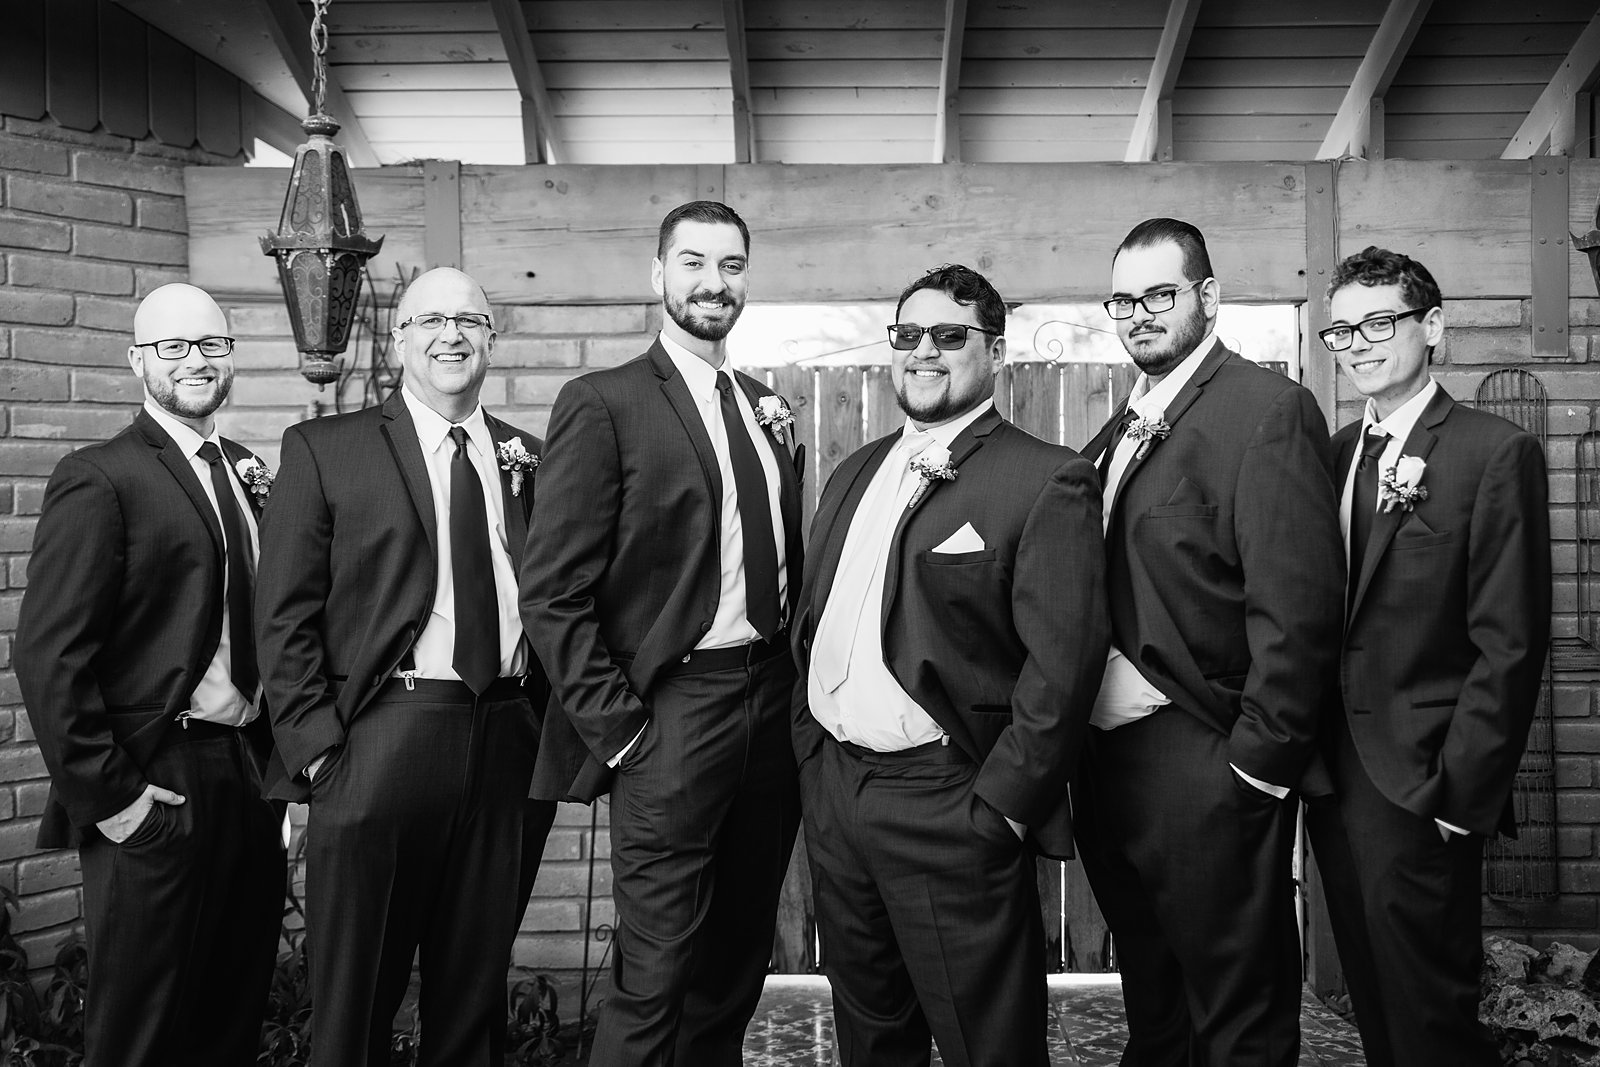 Groom and groomsmen together at a Backyard wedding by Arizona wedding photographer PMA Photography.